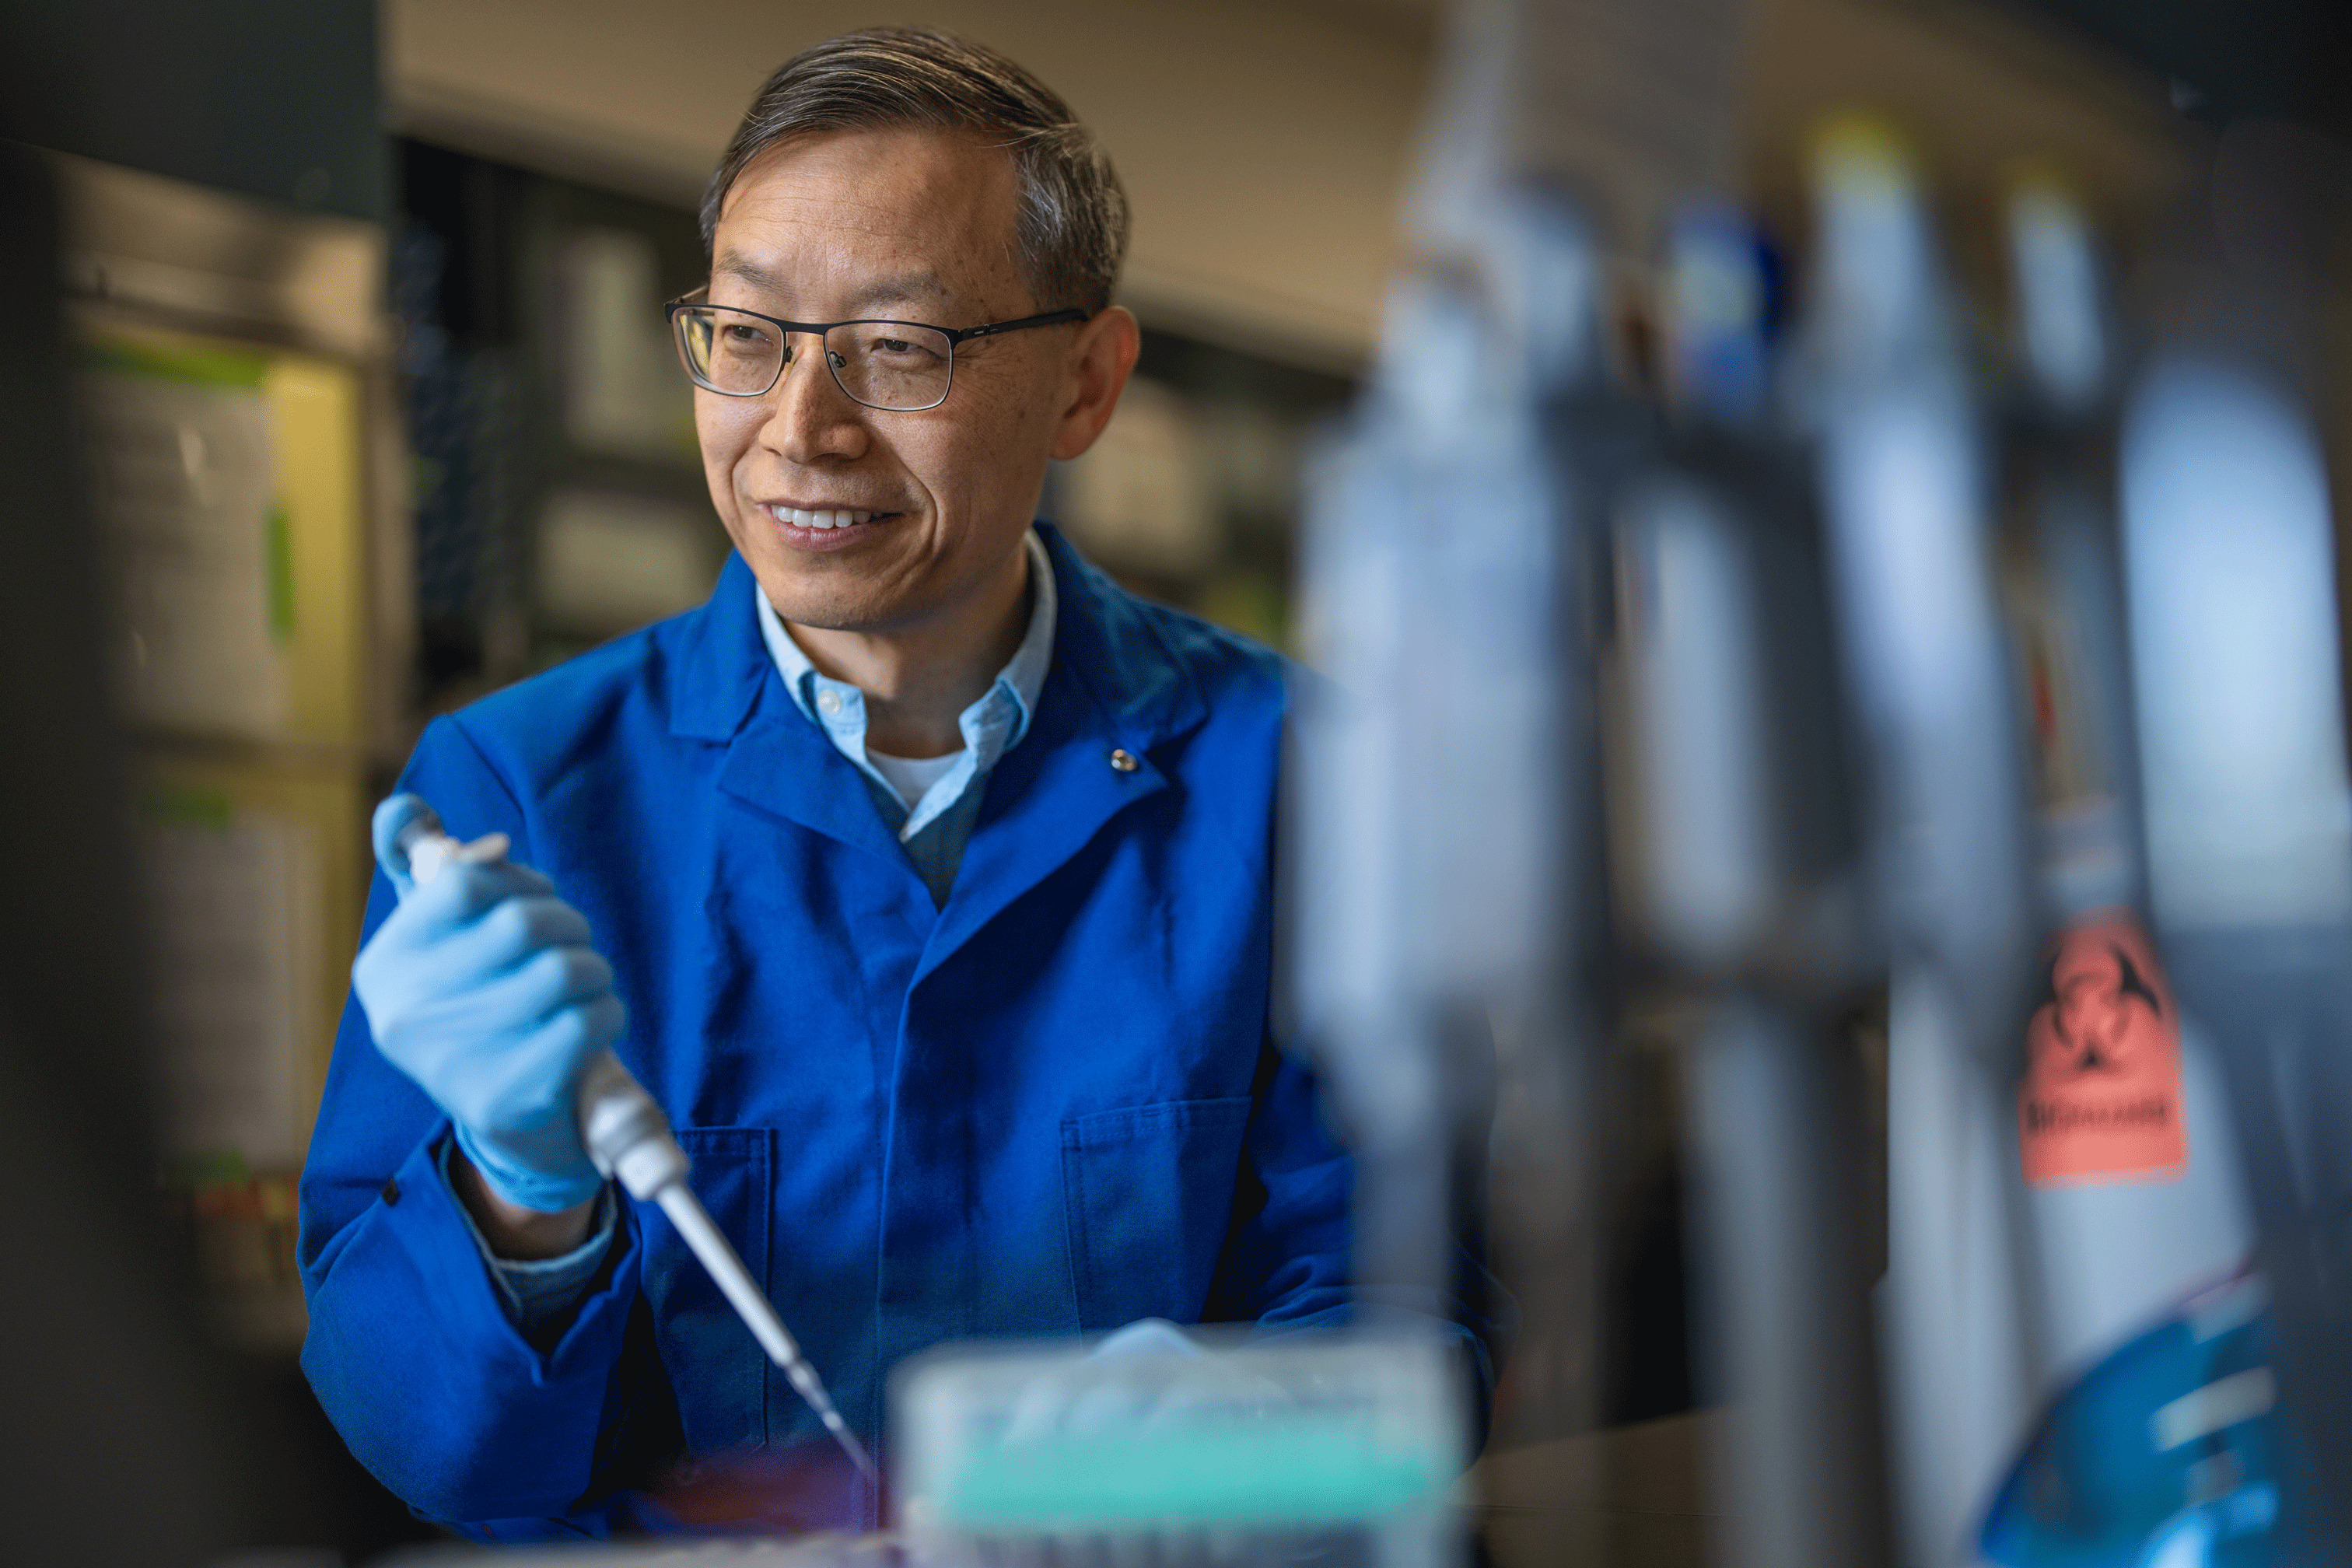 Huaijun Zhou, Ph.D. working in the lab.